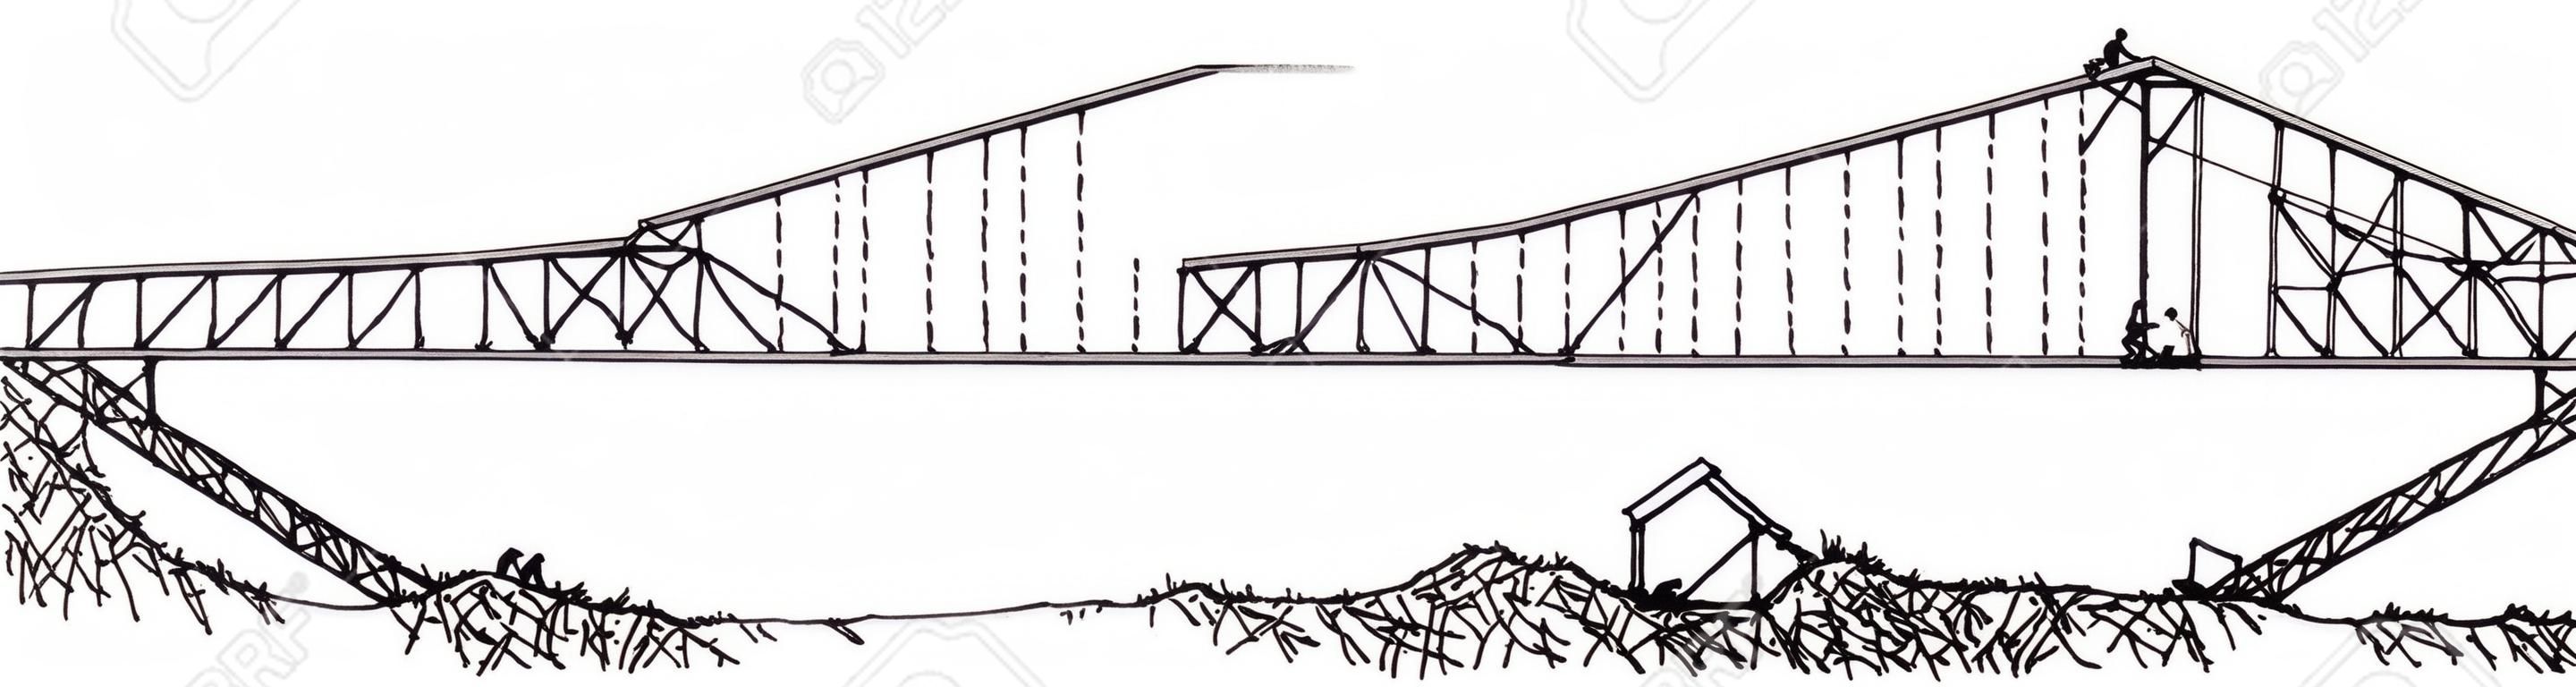 Viaur Viaduct was the first large steel bridge built in France, vintage line drawing or engraving illustration.